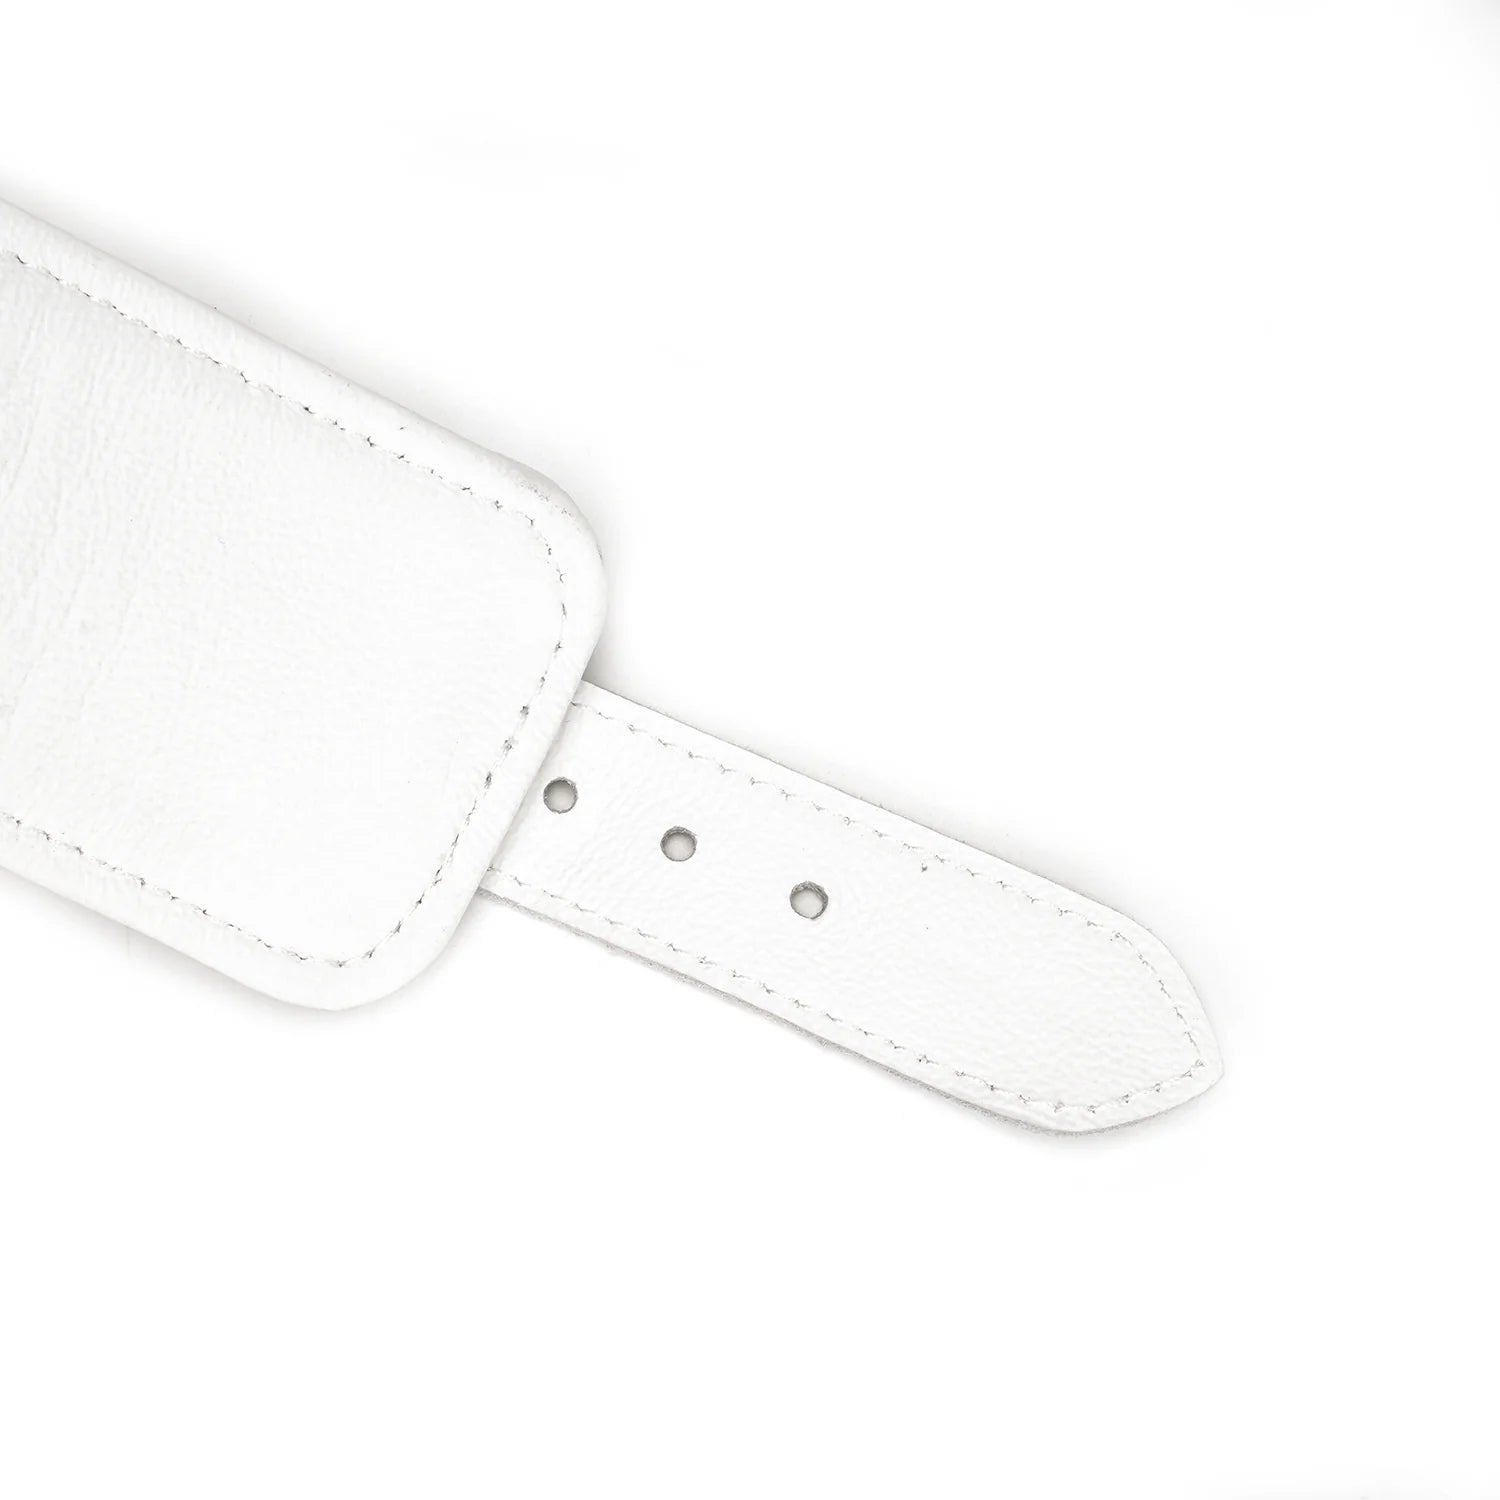 Fuji White - Leather cuff with silver metal